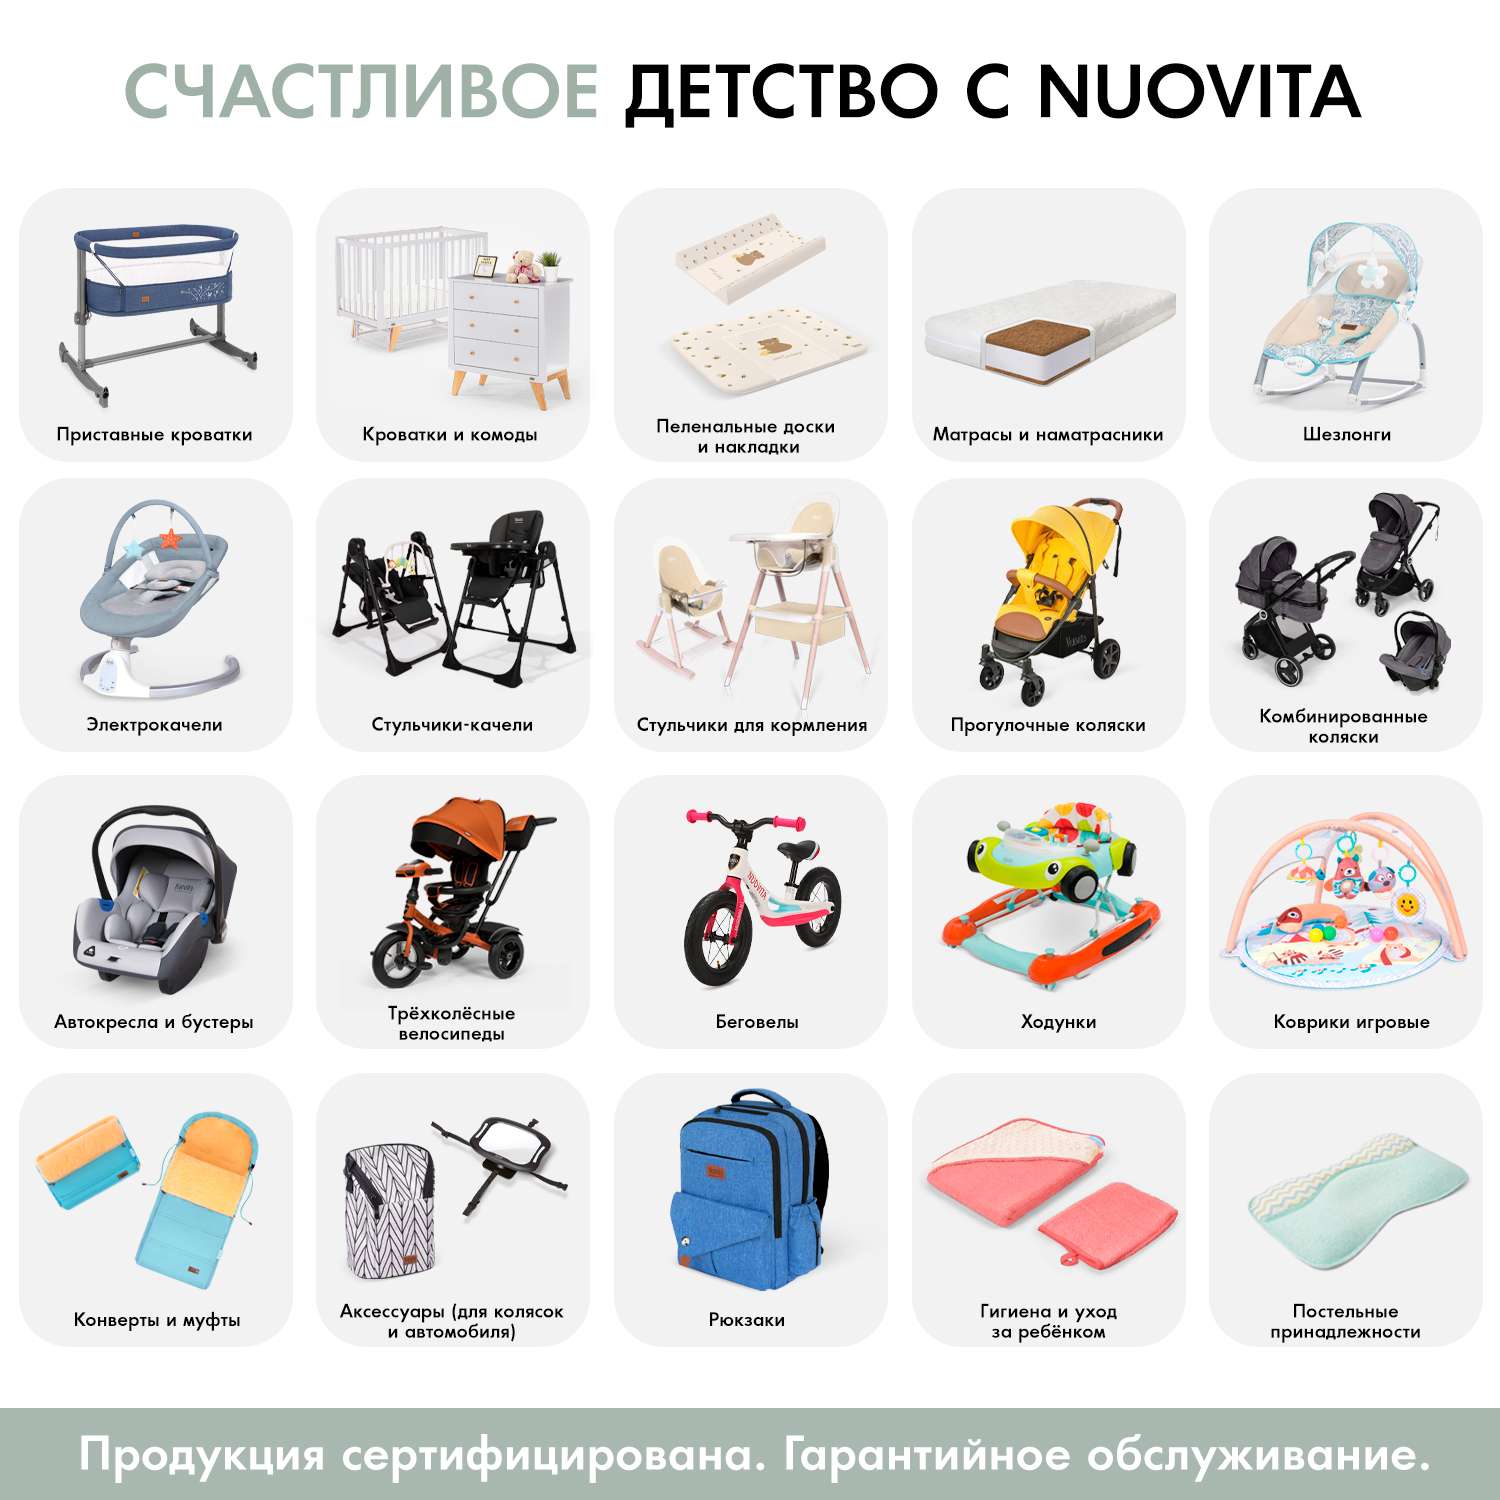 Подушка для новорожденного Nuovita Neonutti Miracolo Dipinto персиковая - фото 12